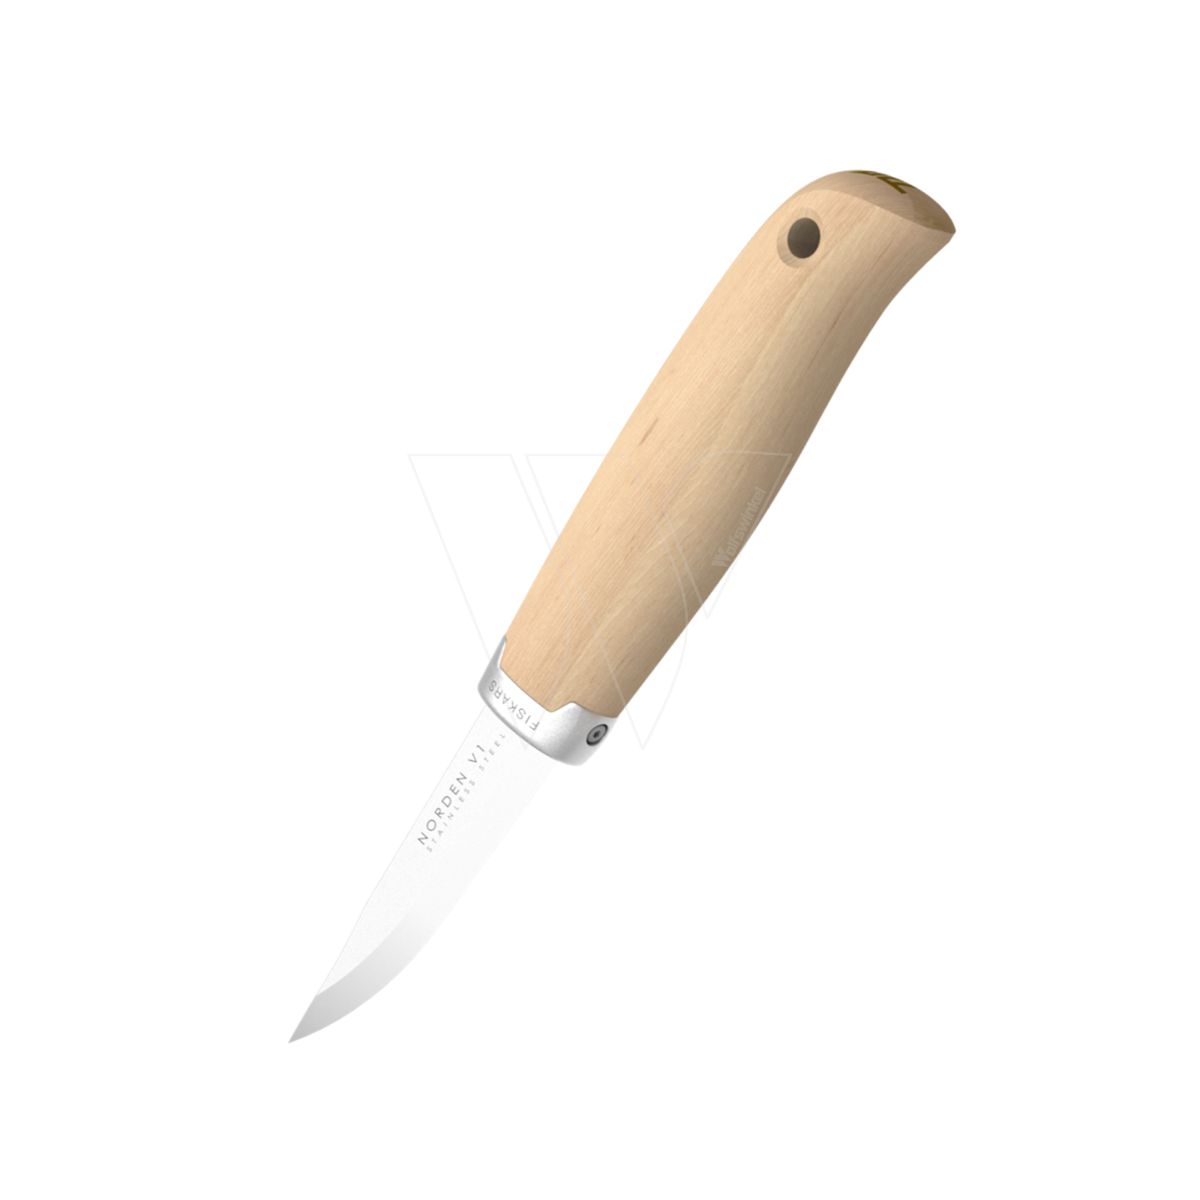 Fiskars norden wood carving knife